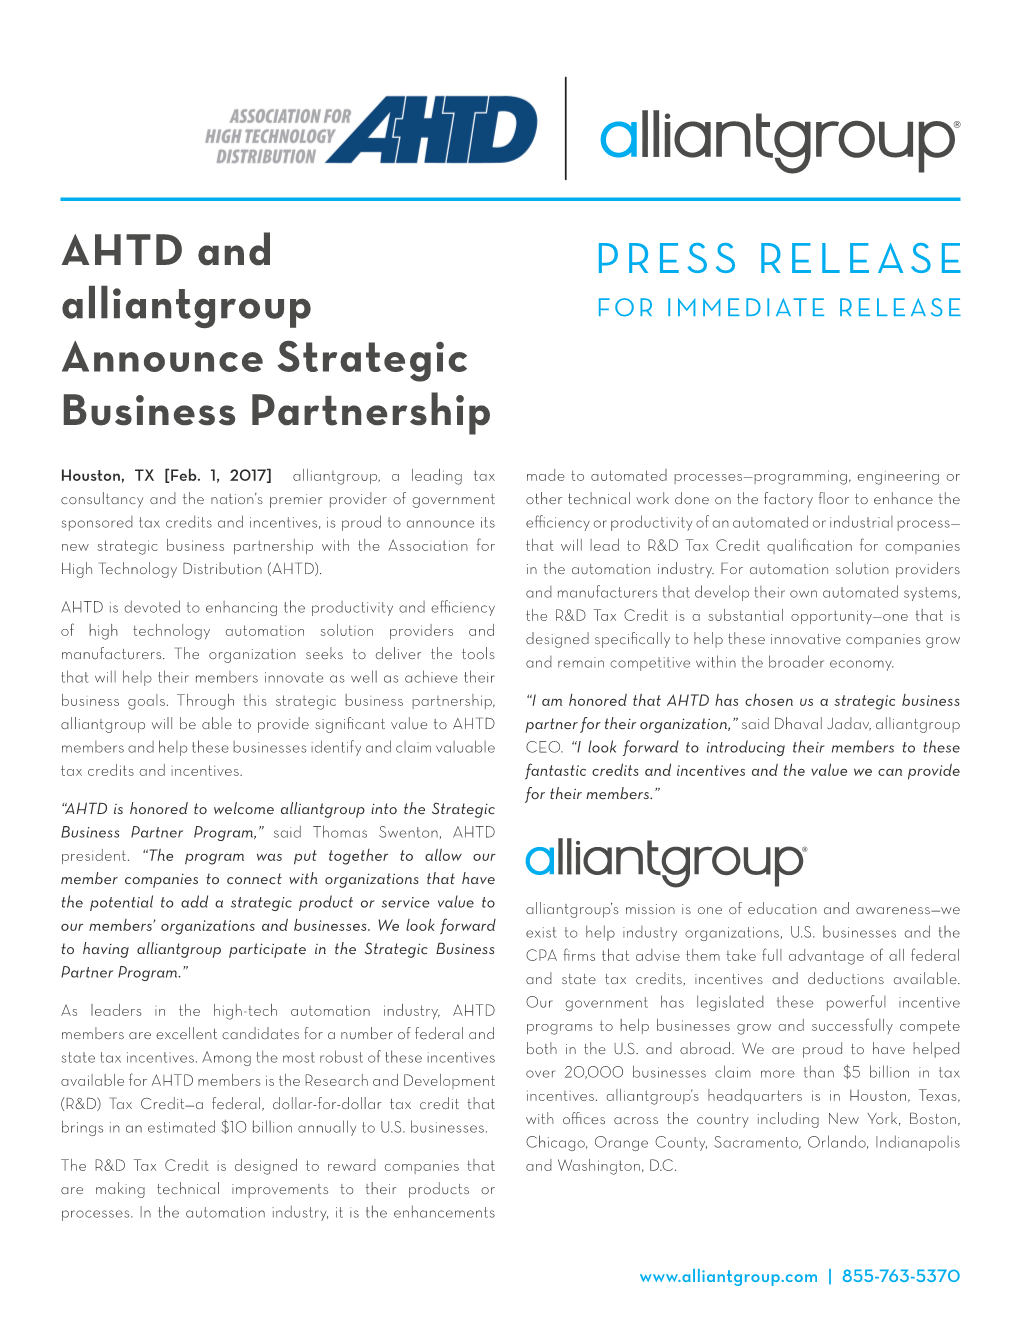 AHTD and Alliantgroup Announce Strategic Business Partnership